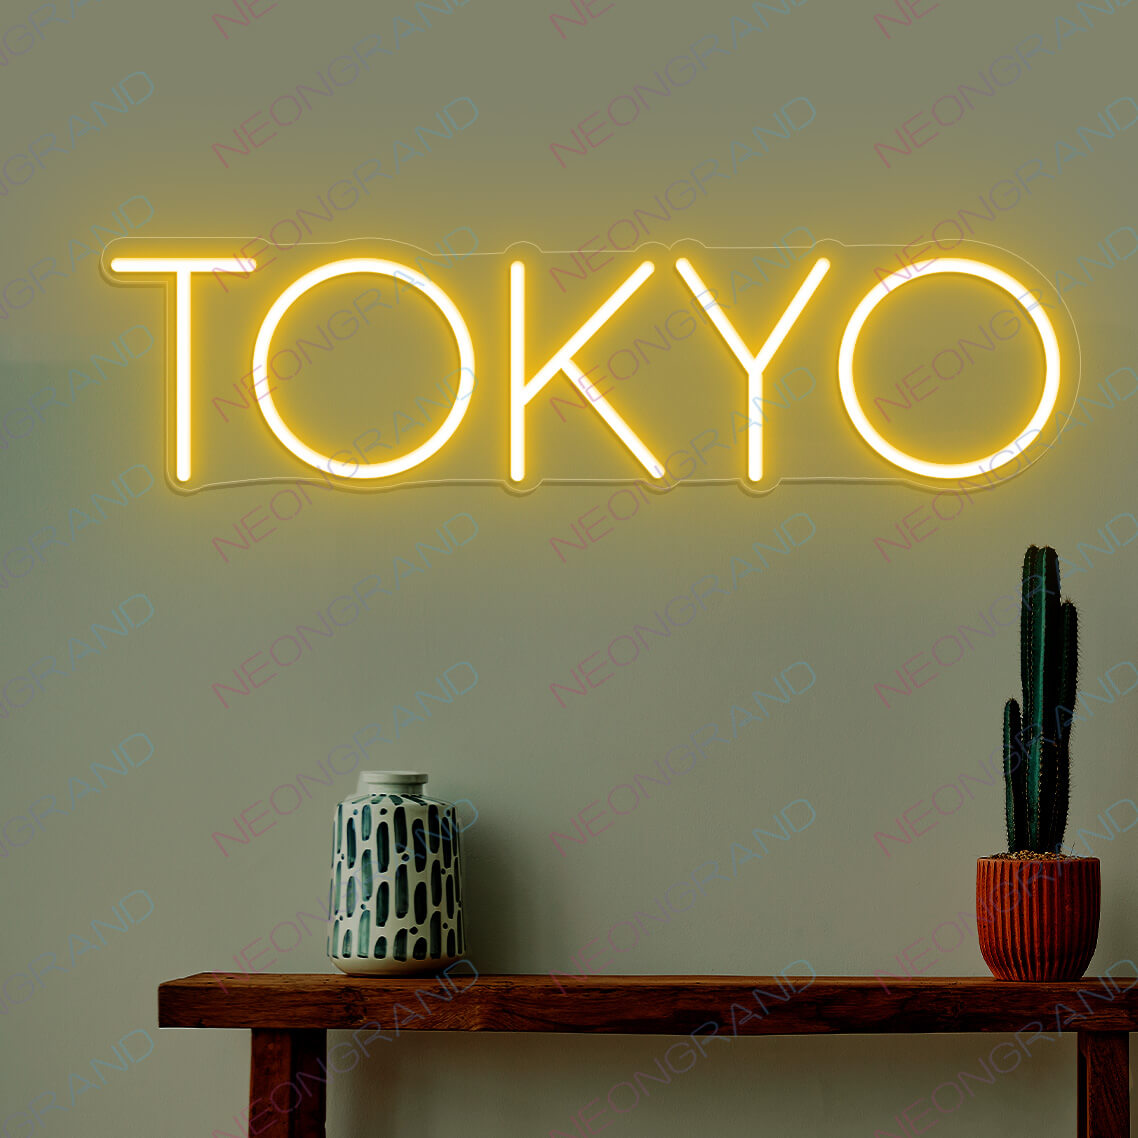 Tokyo Neon Sign Led Light, Japanese Neon Signs orange yellow